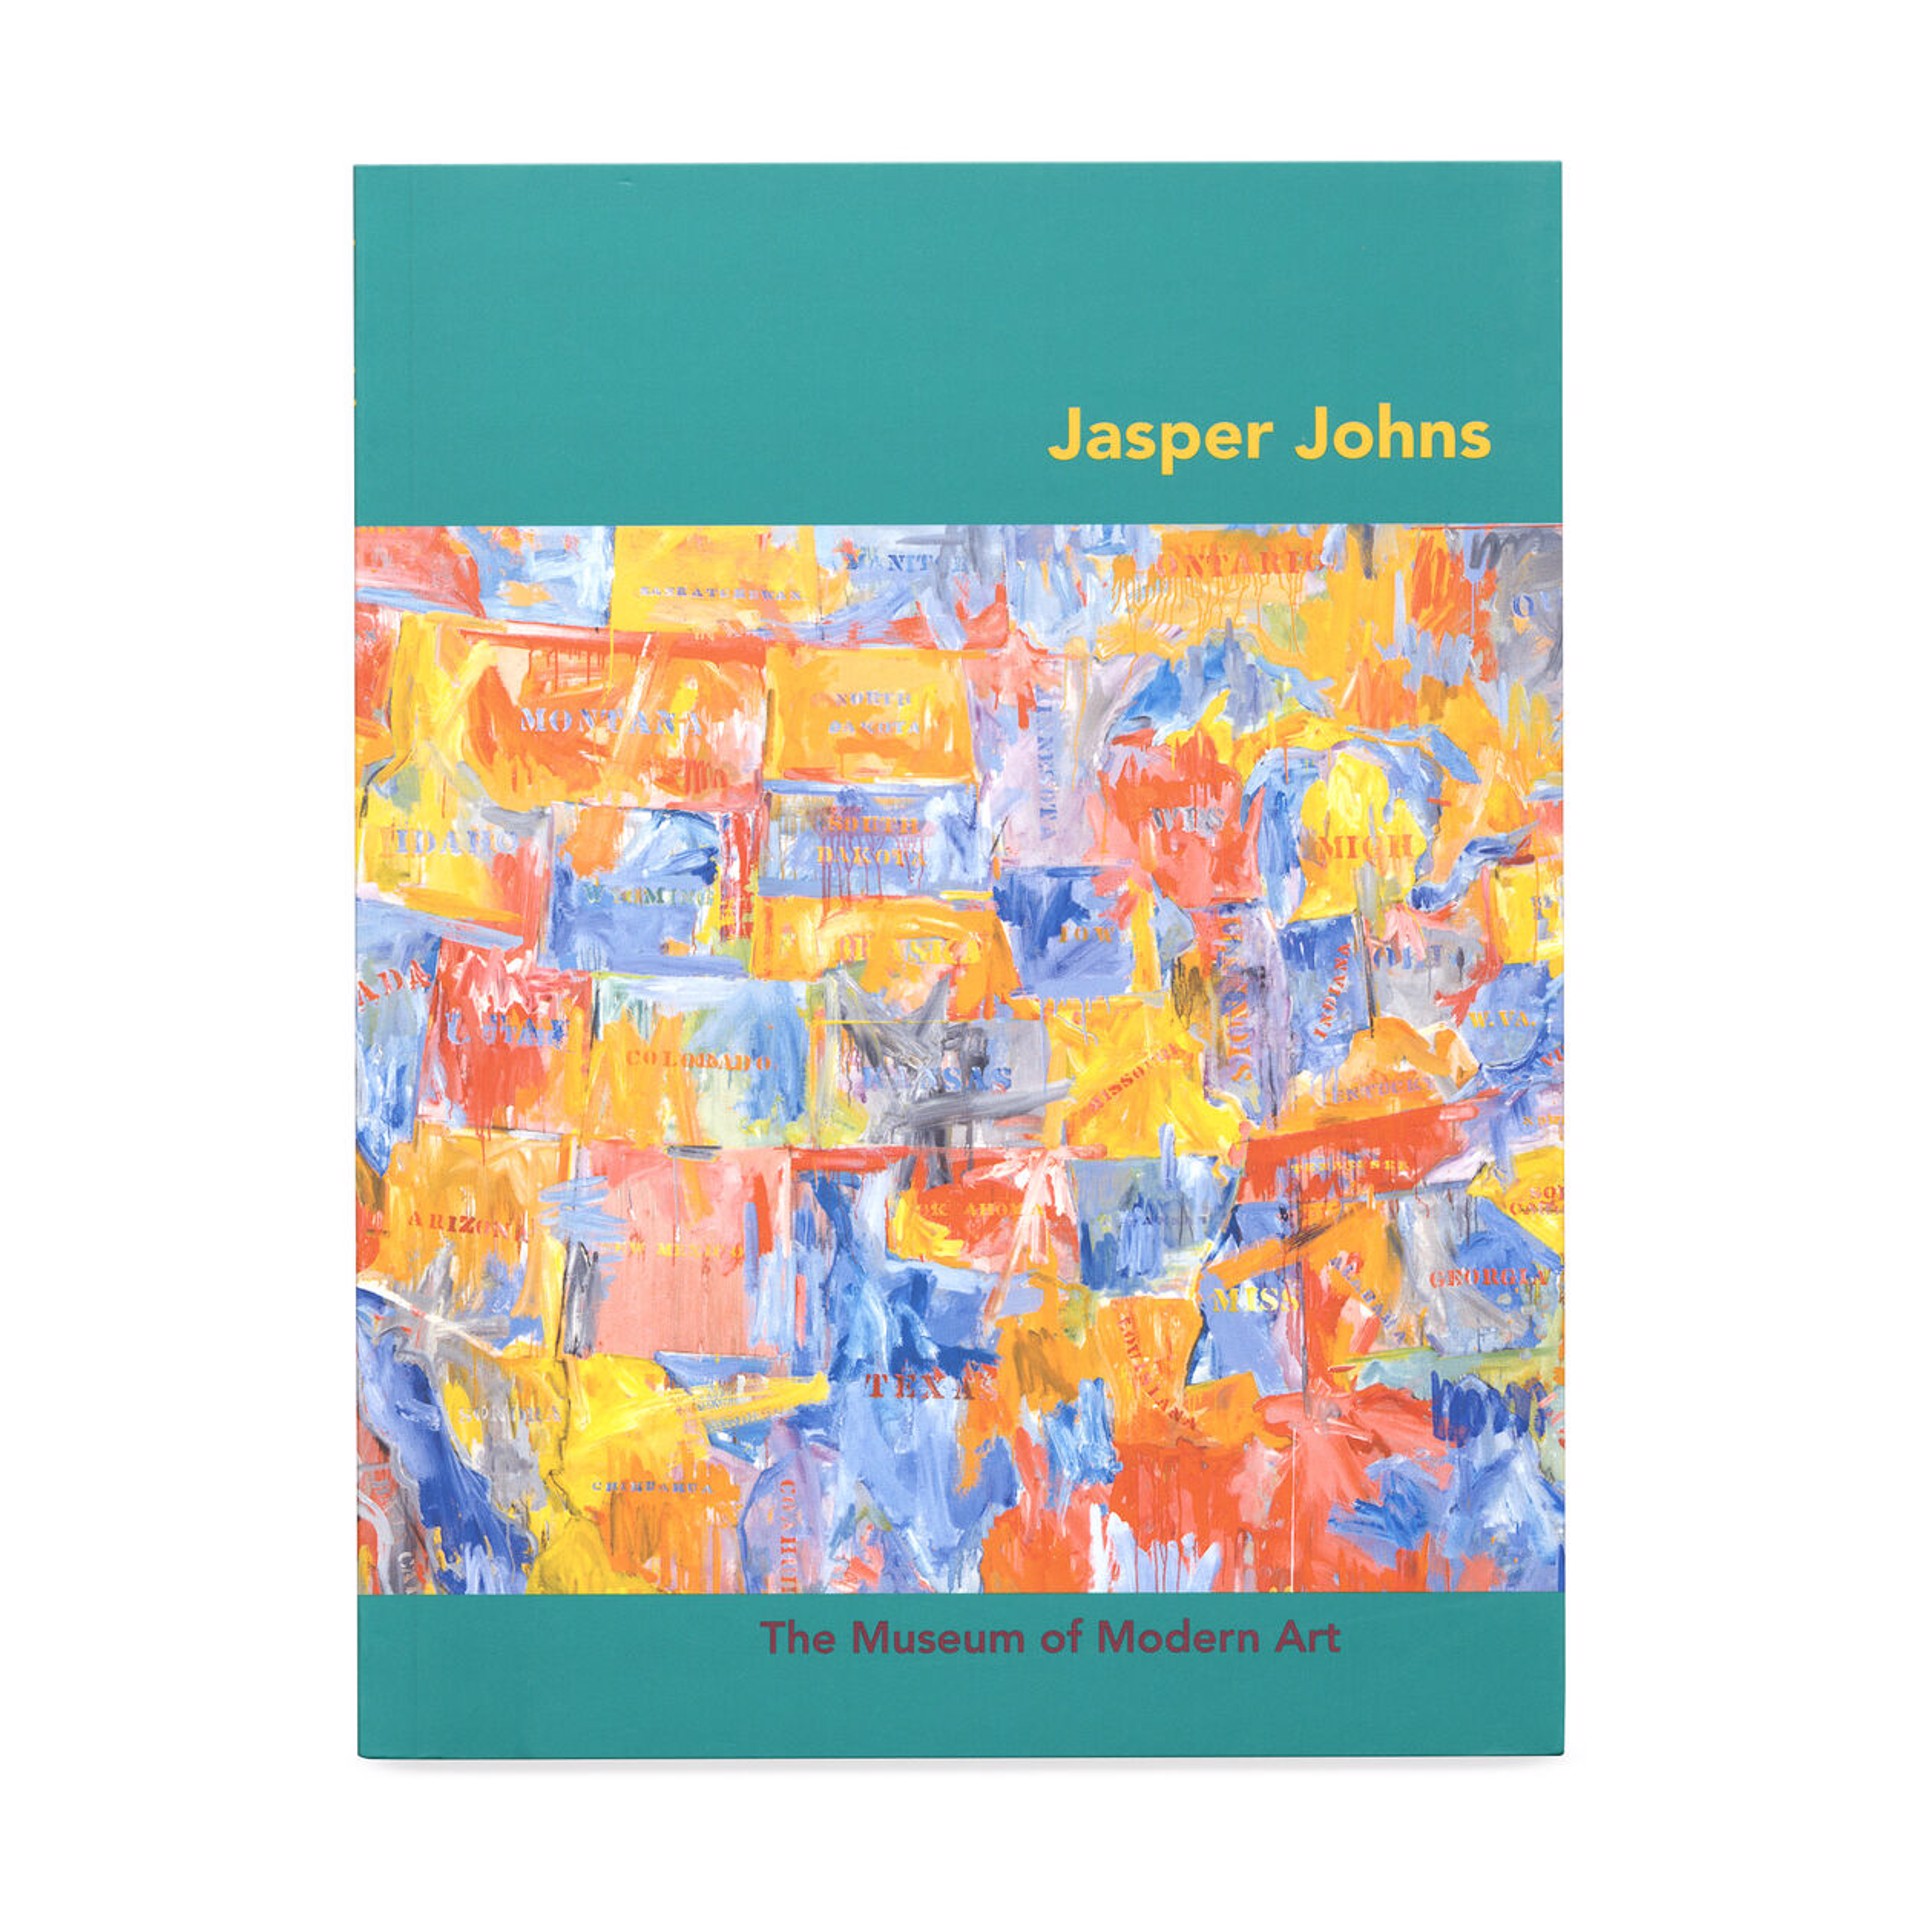 Jasper Johns by Jasper Johns